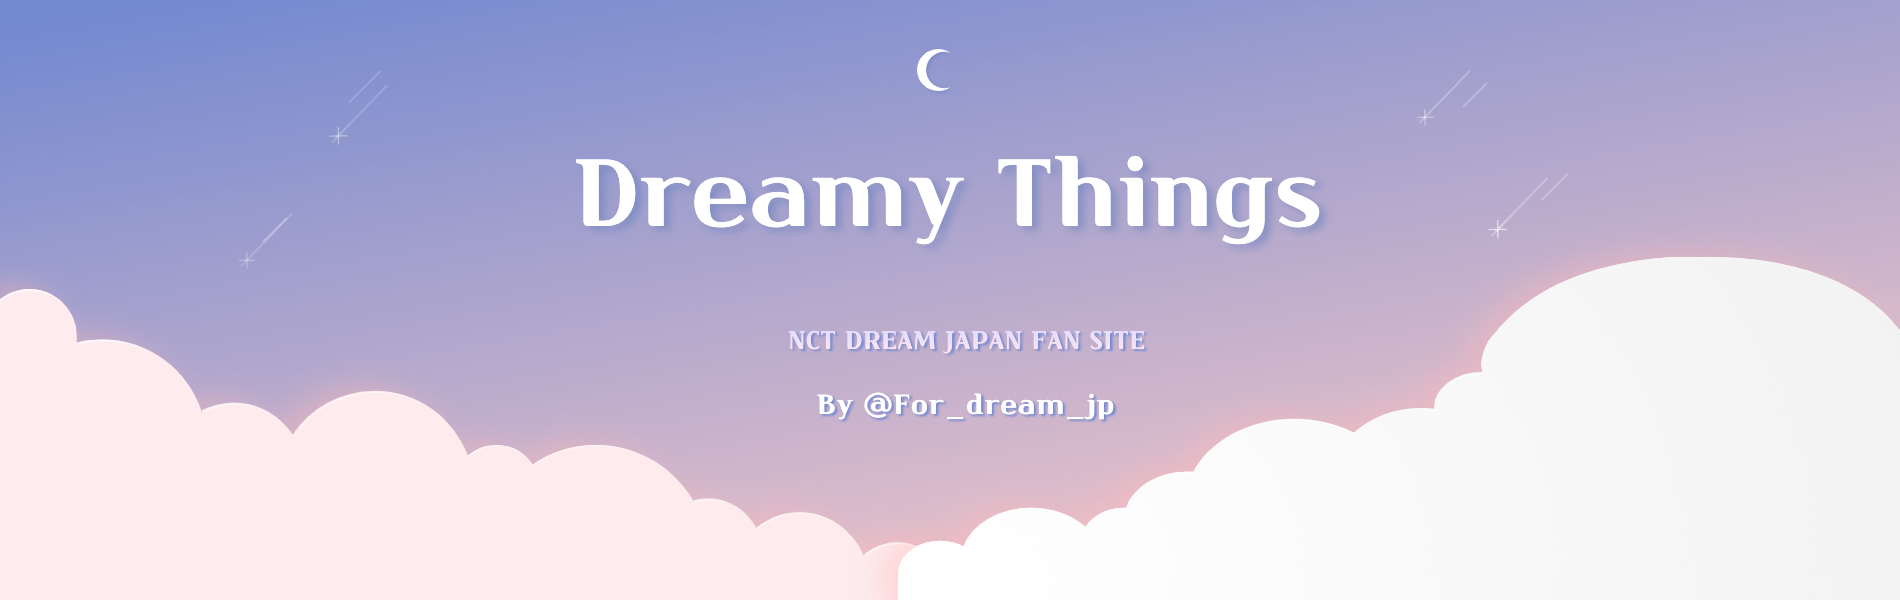 nct dream japan dreamy things